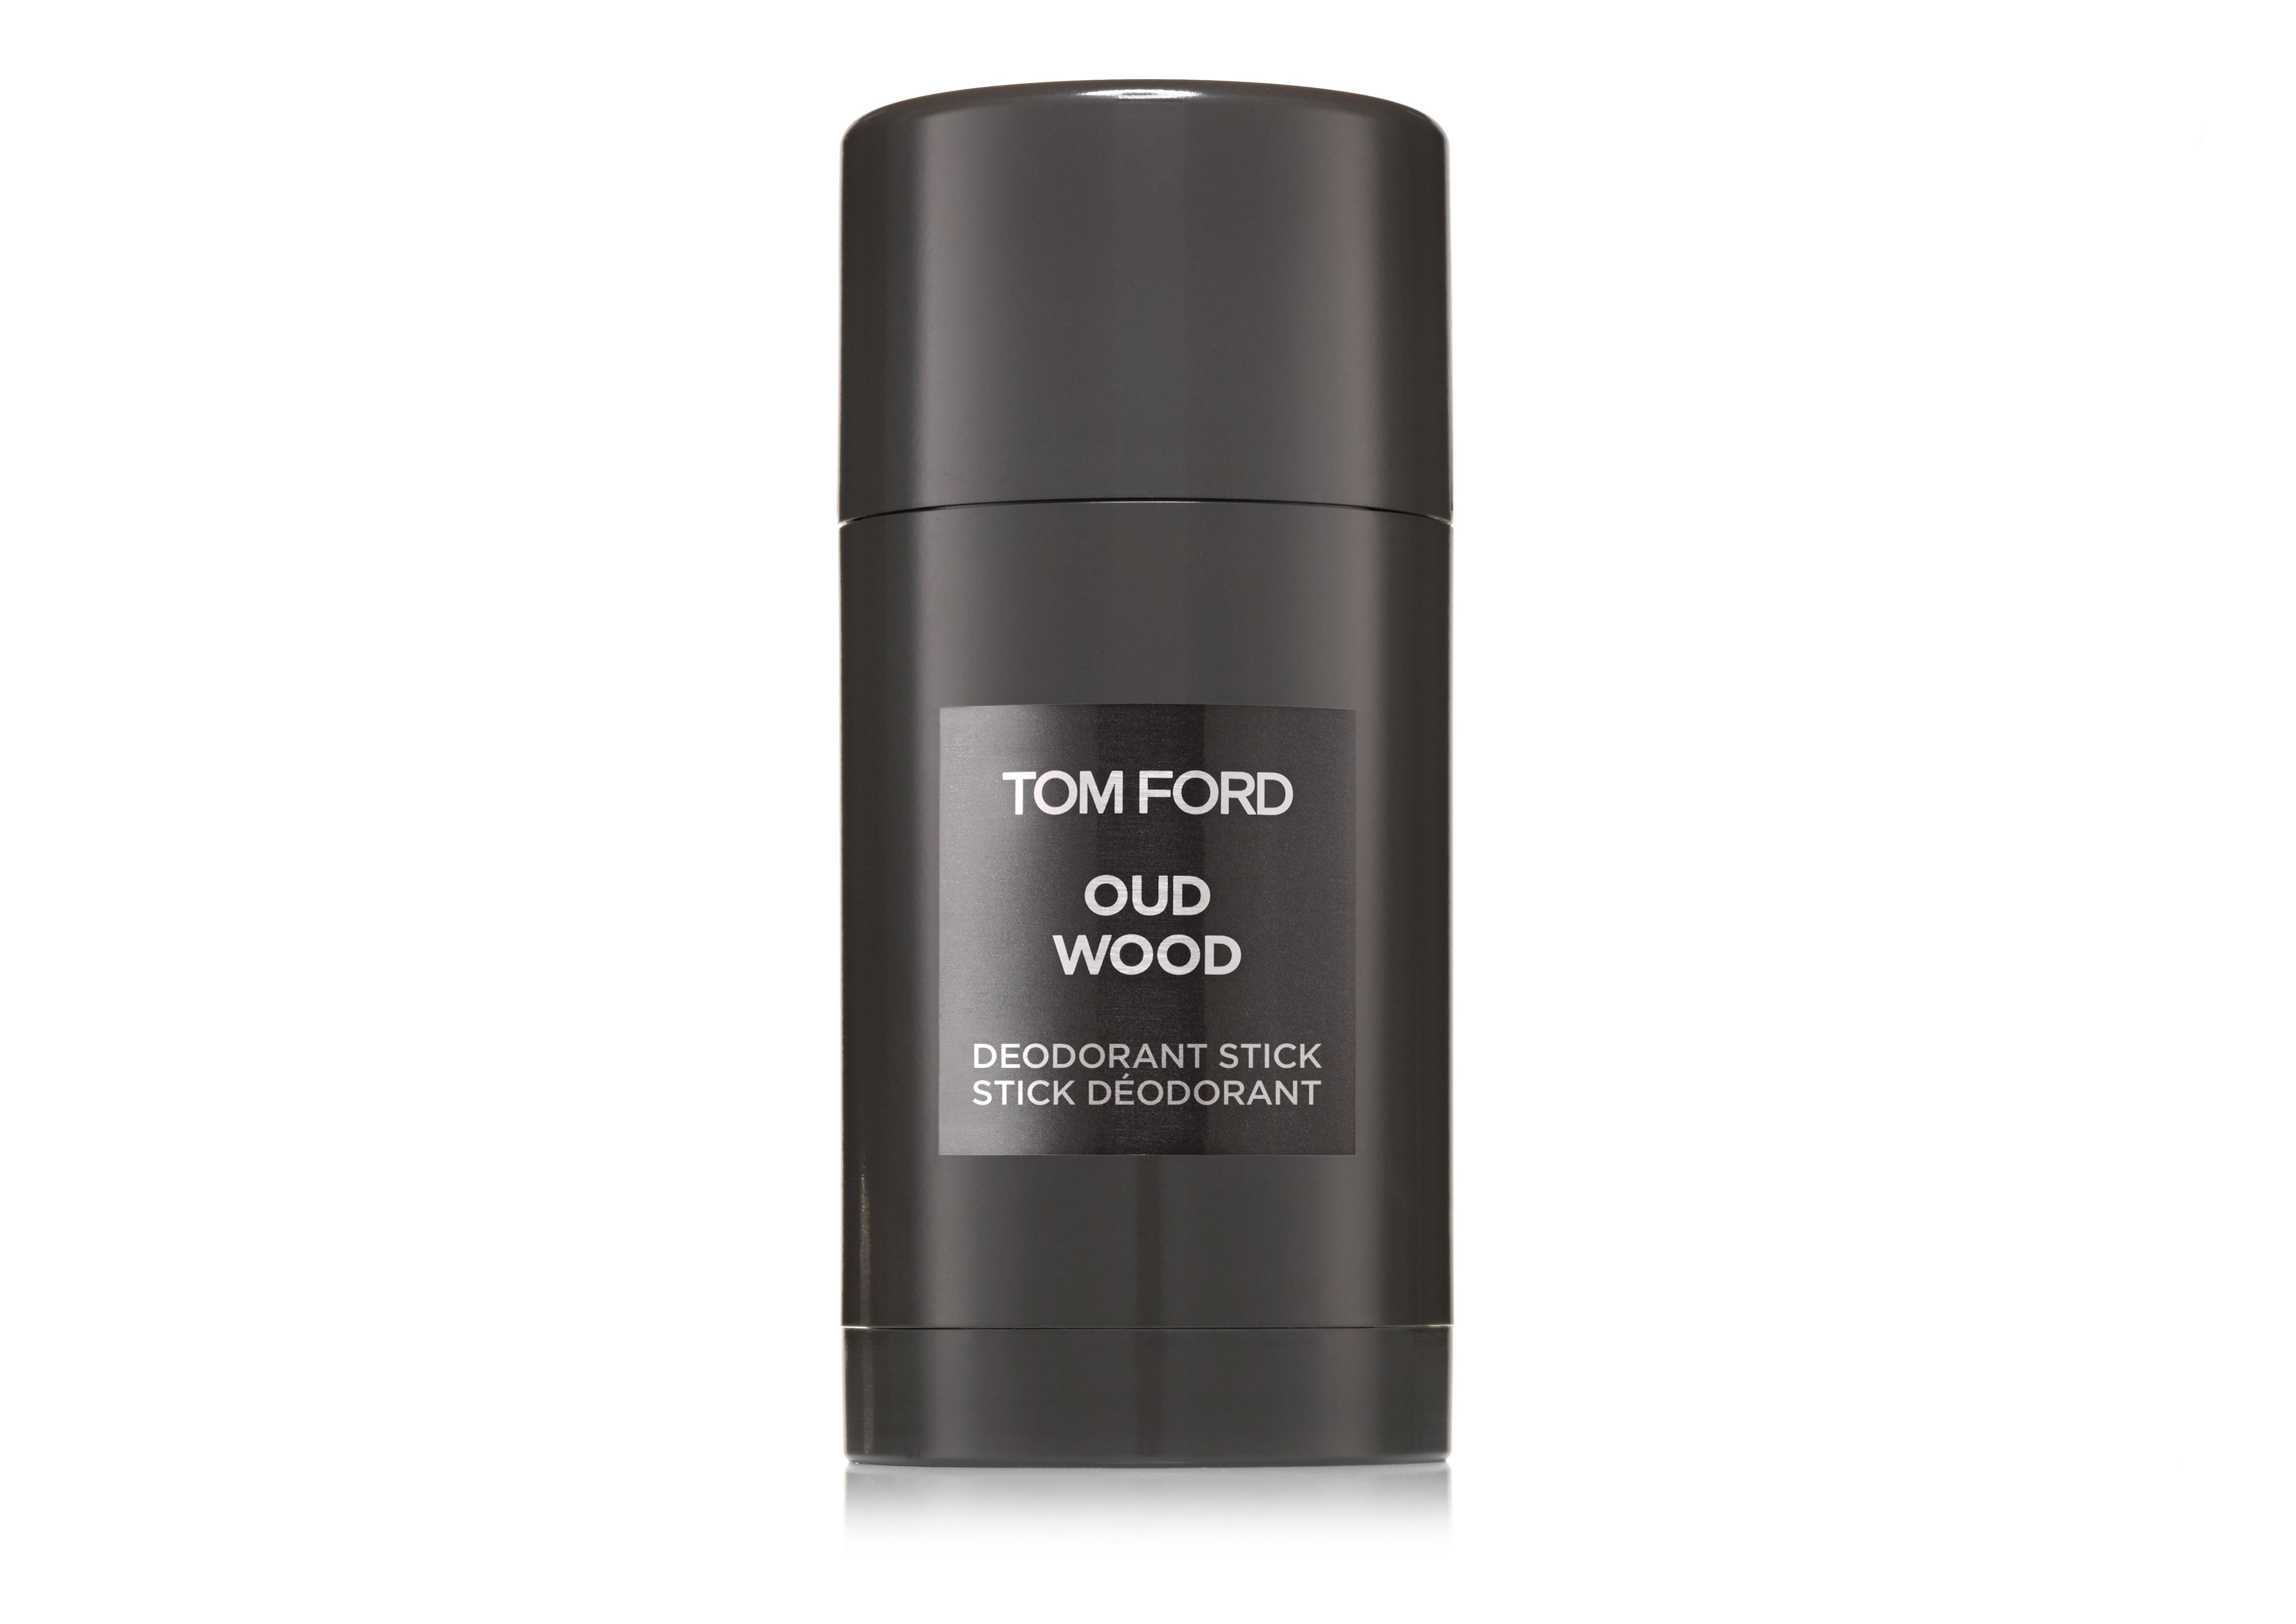 Tom Ford OUD WOOD DEODORANT STICK TomFord.co.uk